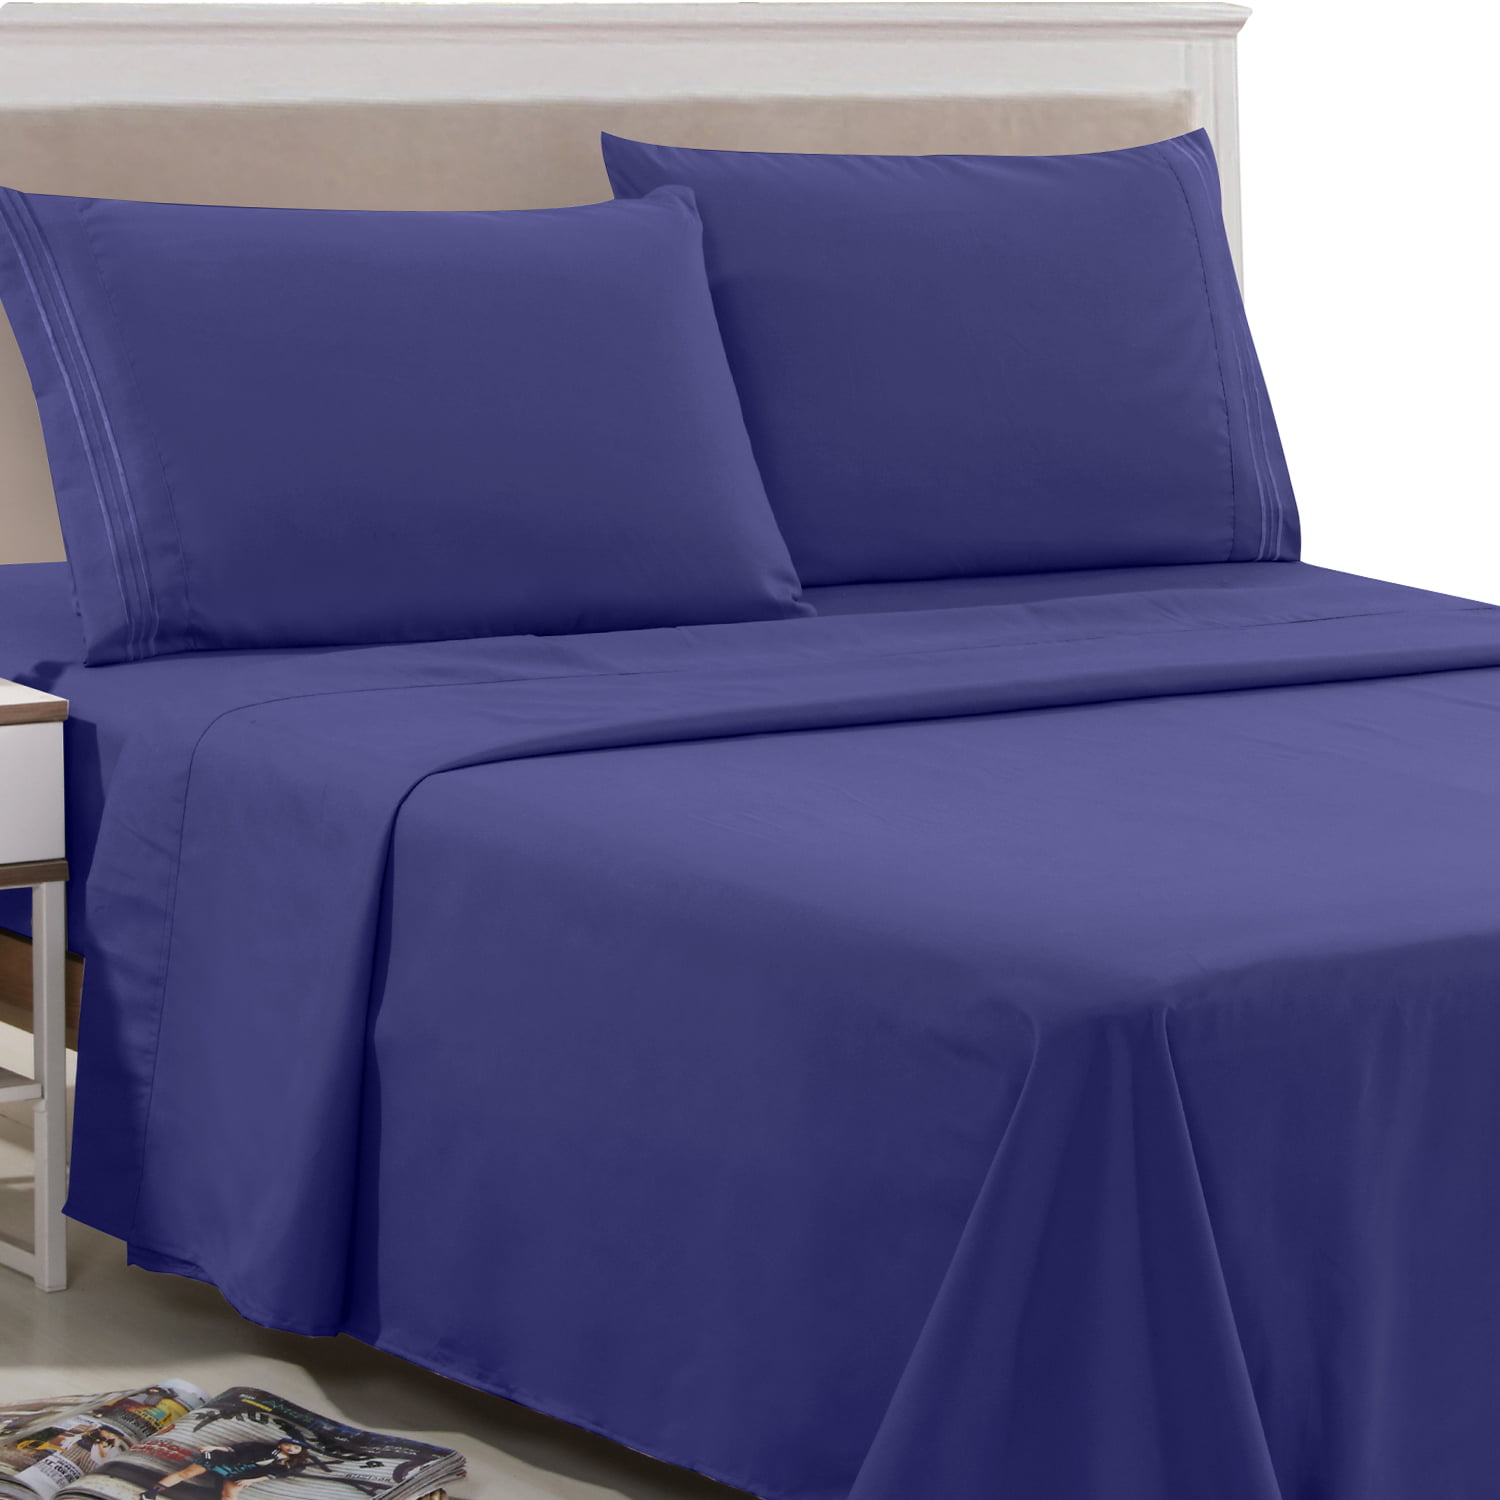 Details about   Cozy Bedding Flat Sheet+2 Pillow Case 1200TC UK Emperor Size Striped Colors 